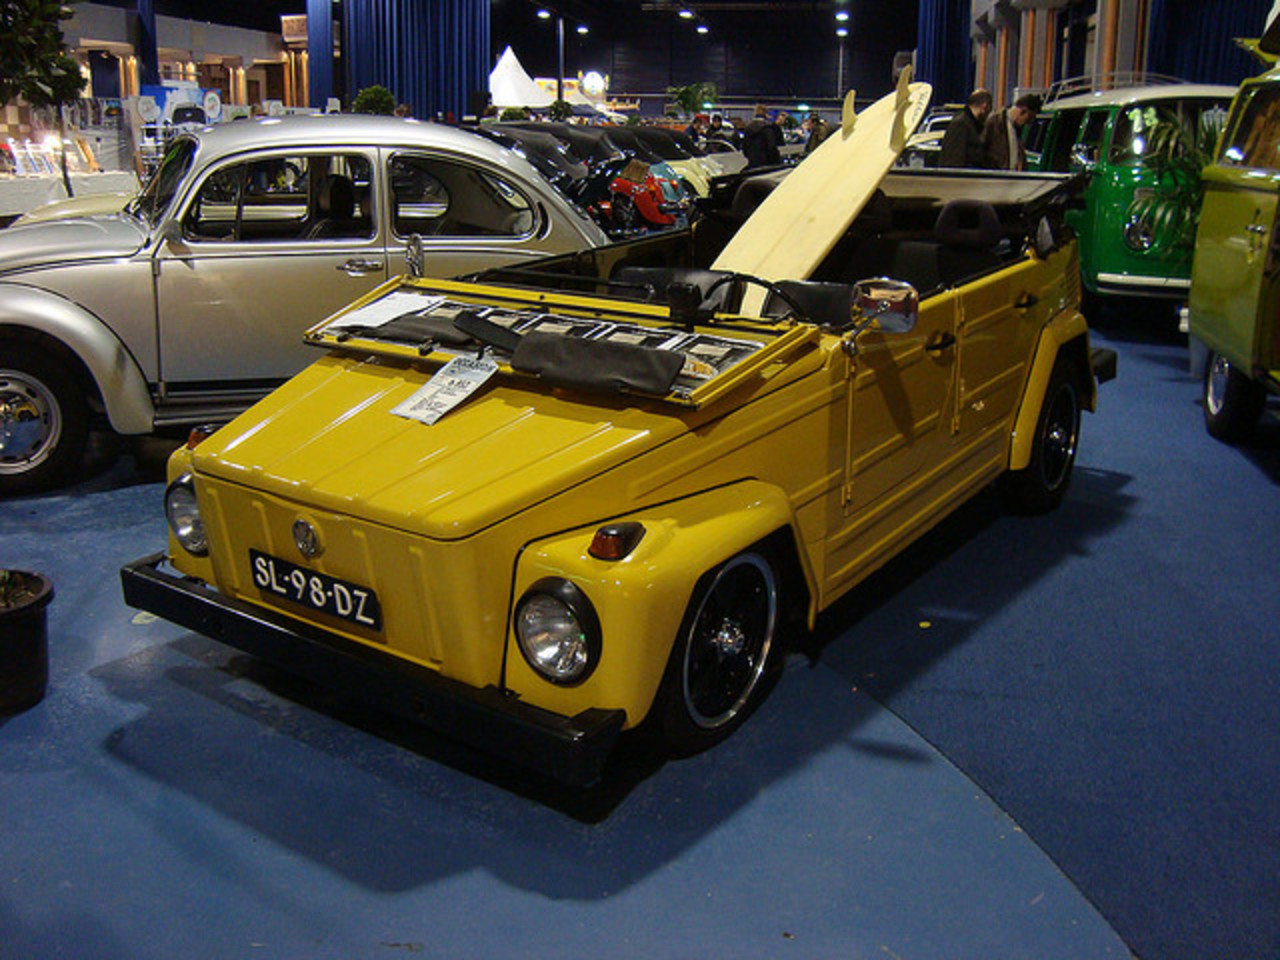 Volkswagen Type 181 Kurierwagen - a gallery on Flickr